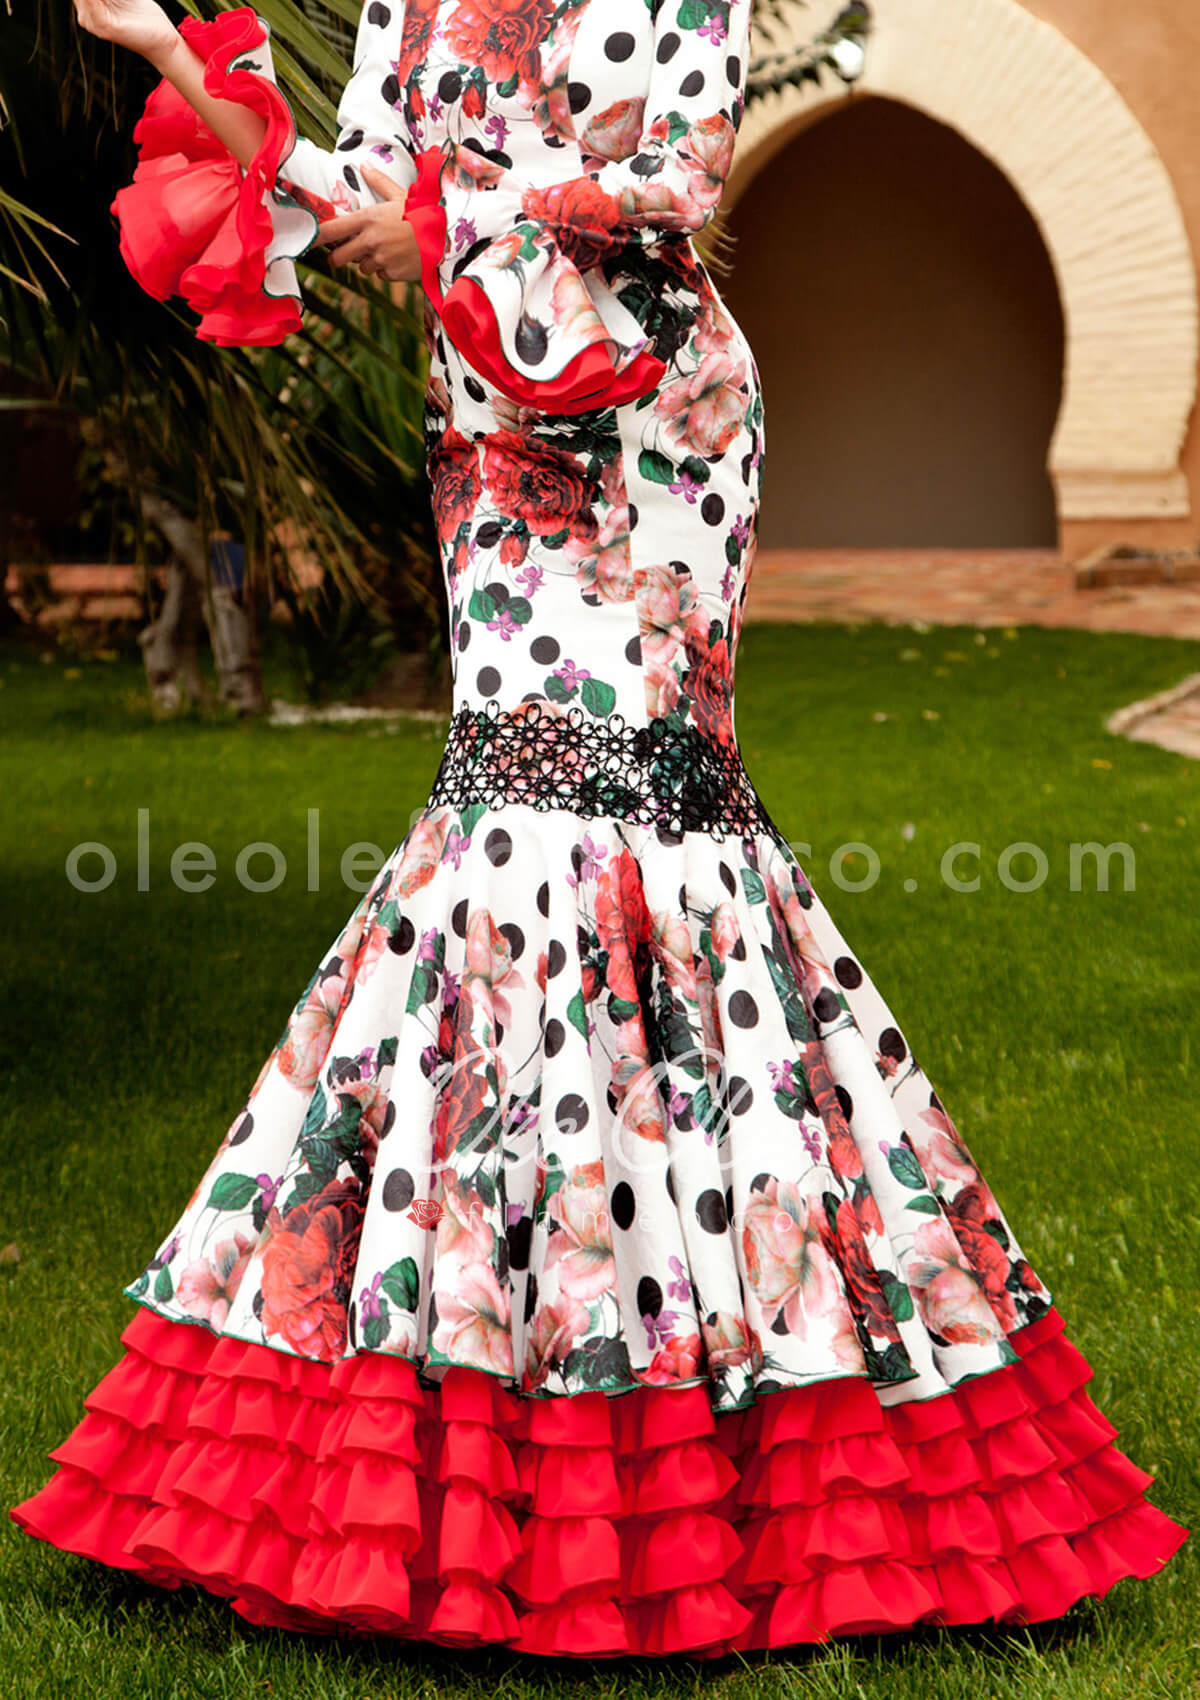 Flamenco Sevillana Granate Gown Dress